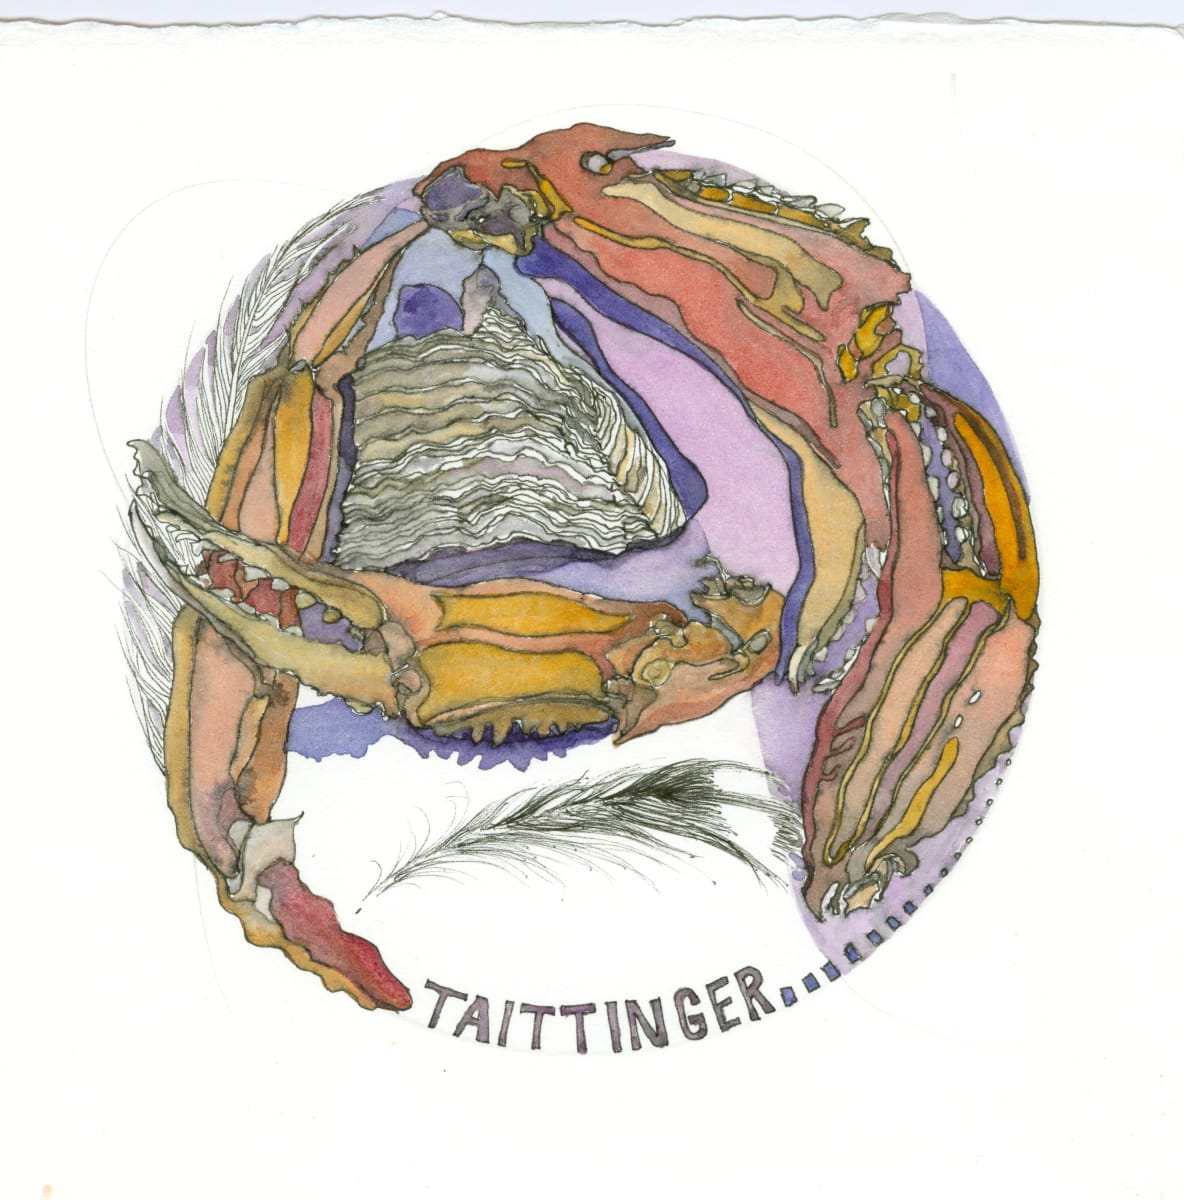 Taittinger - Dala Art  Image: Taittinger - Dala Art